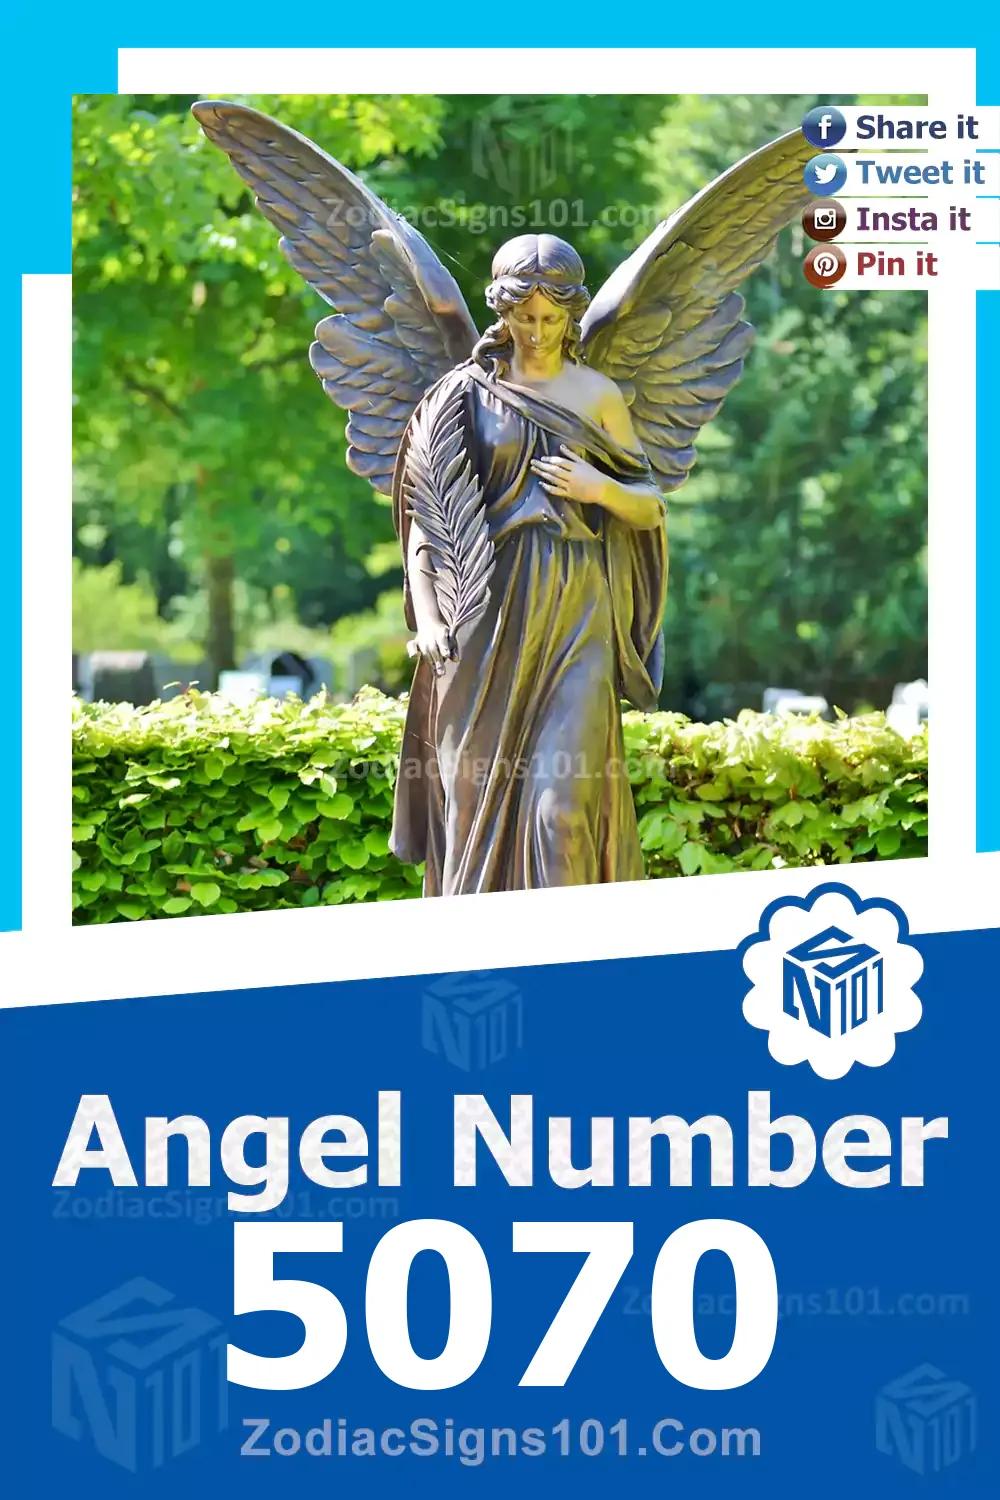 5070-Angel-Number-Meaning.jpg